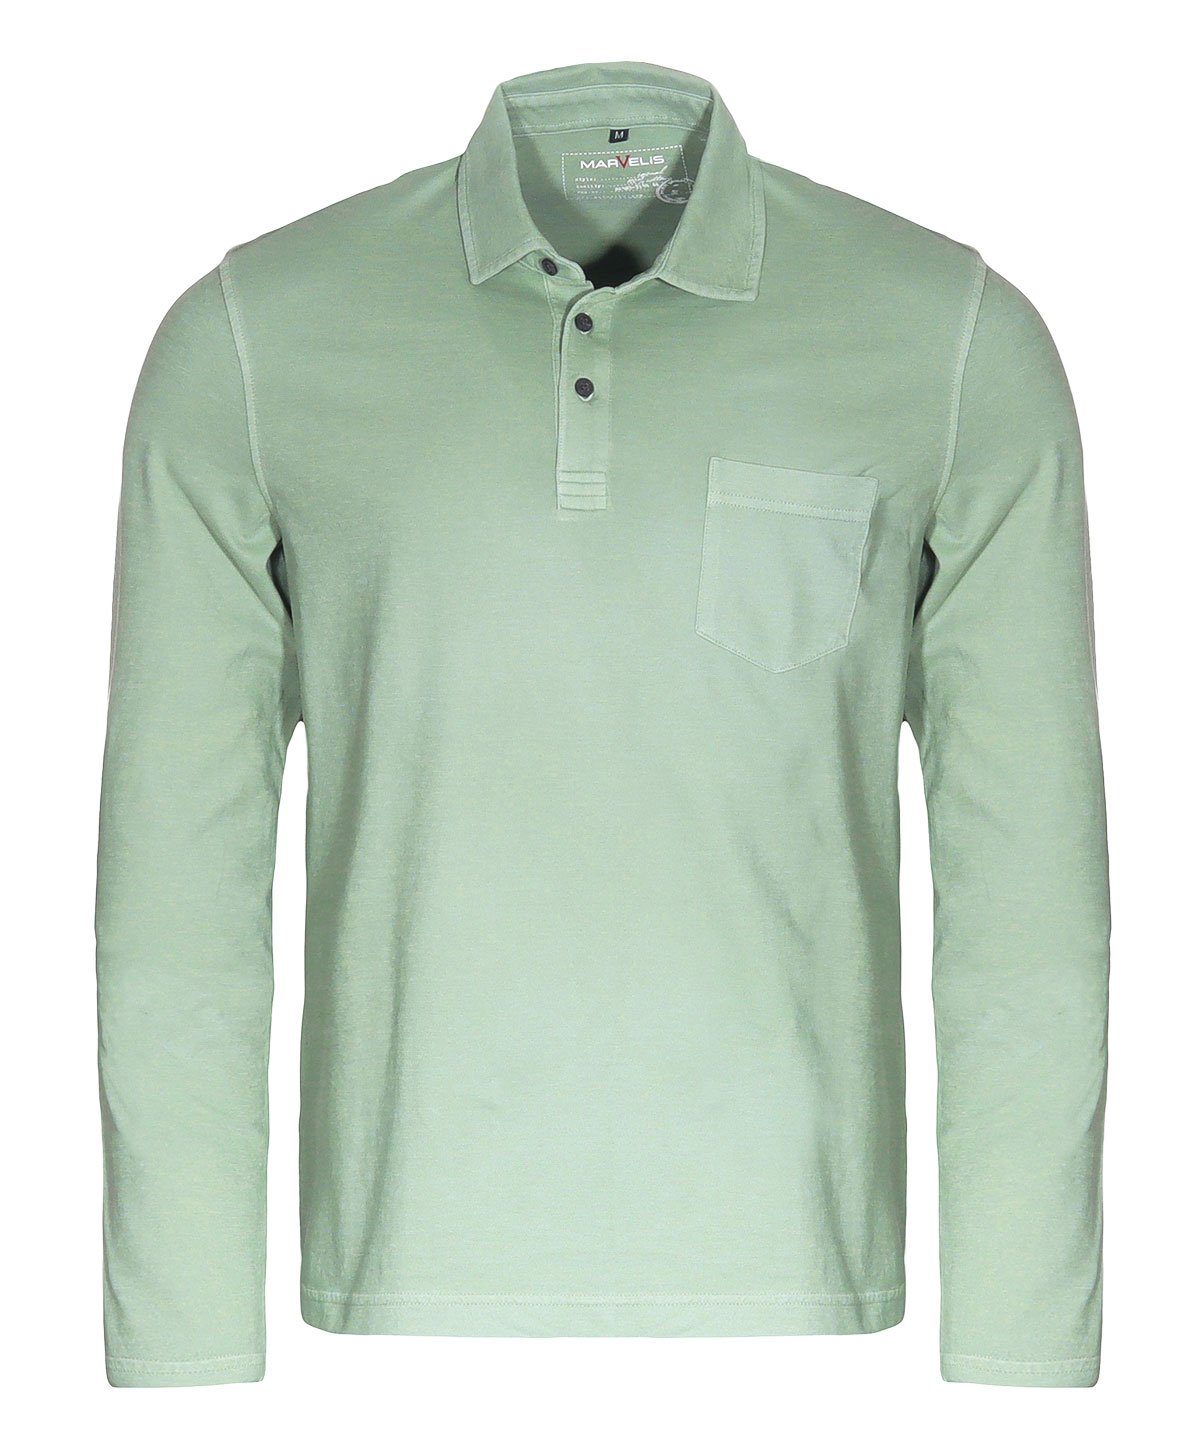 MARVELIS Poloshirt - Fit - Poloshirt - Casual Polokragen Einfarbig - Hellgrün